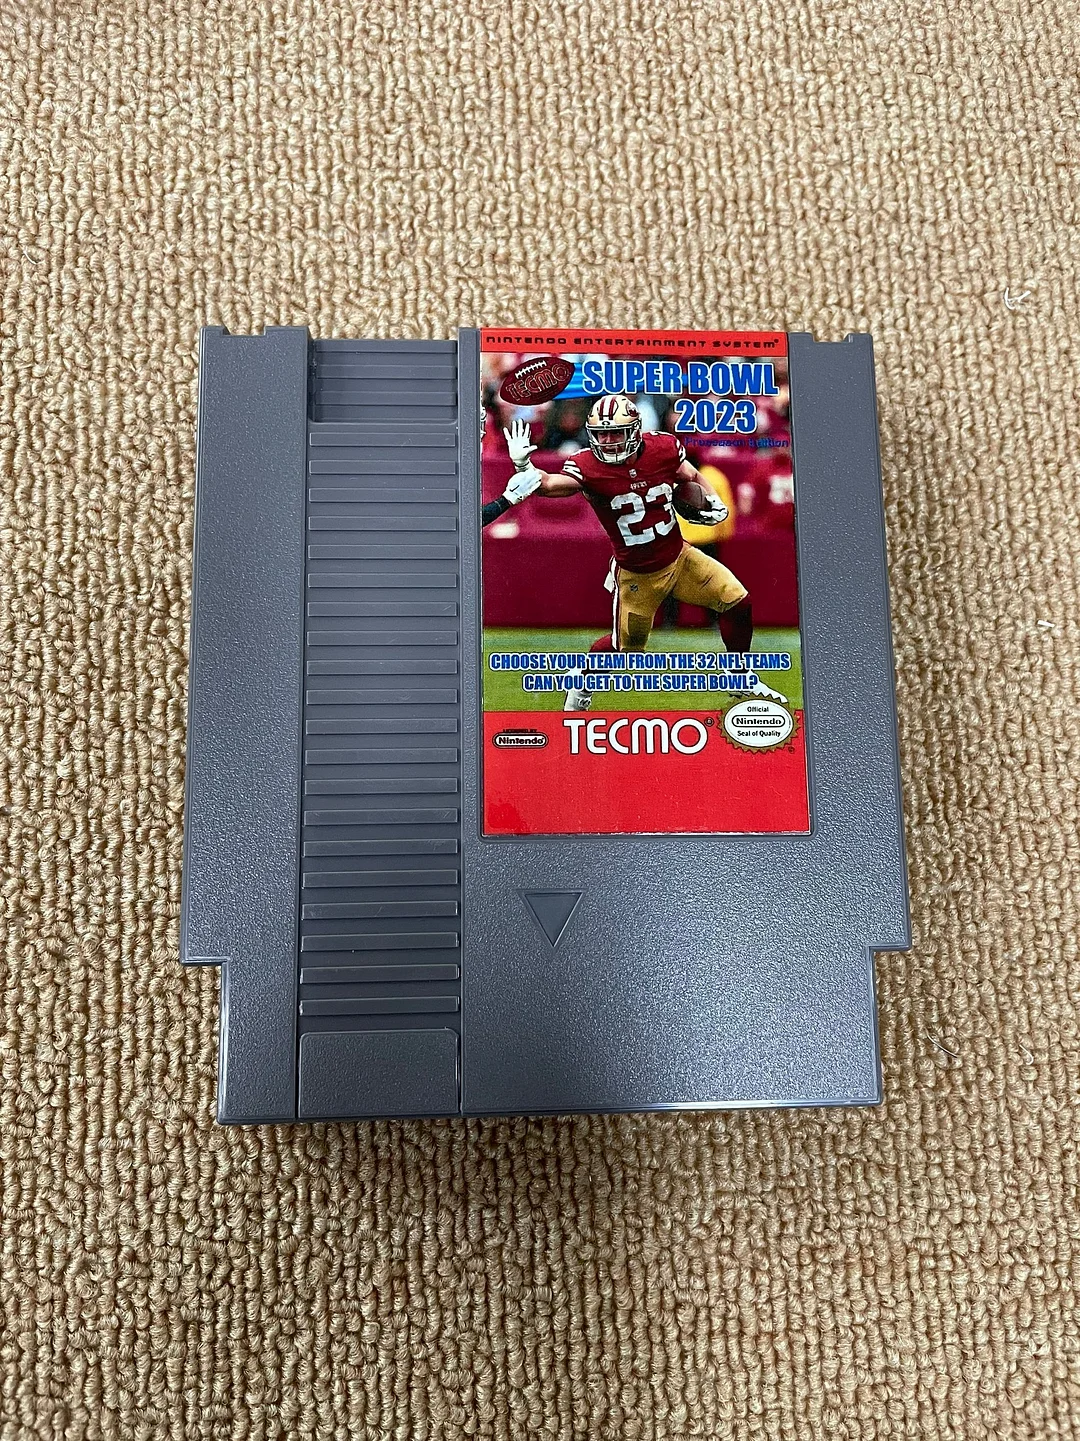 Tecmo Super Bowl 2023 Preseason Edition NES For Nintendo Entertainment System - 8 Bit Game Cartridge